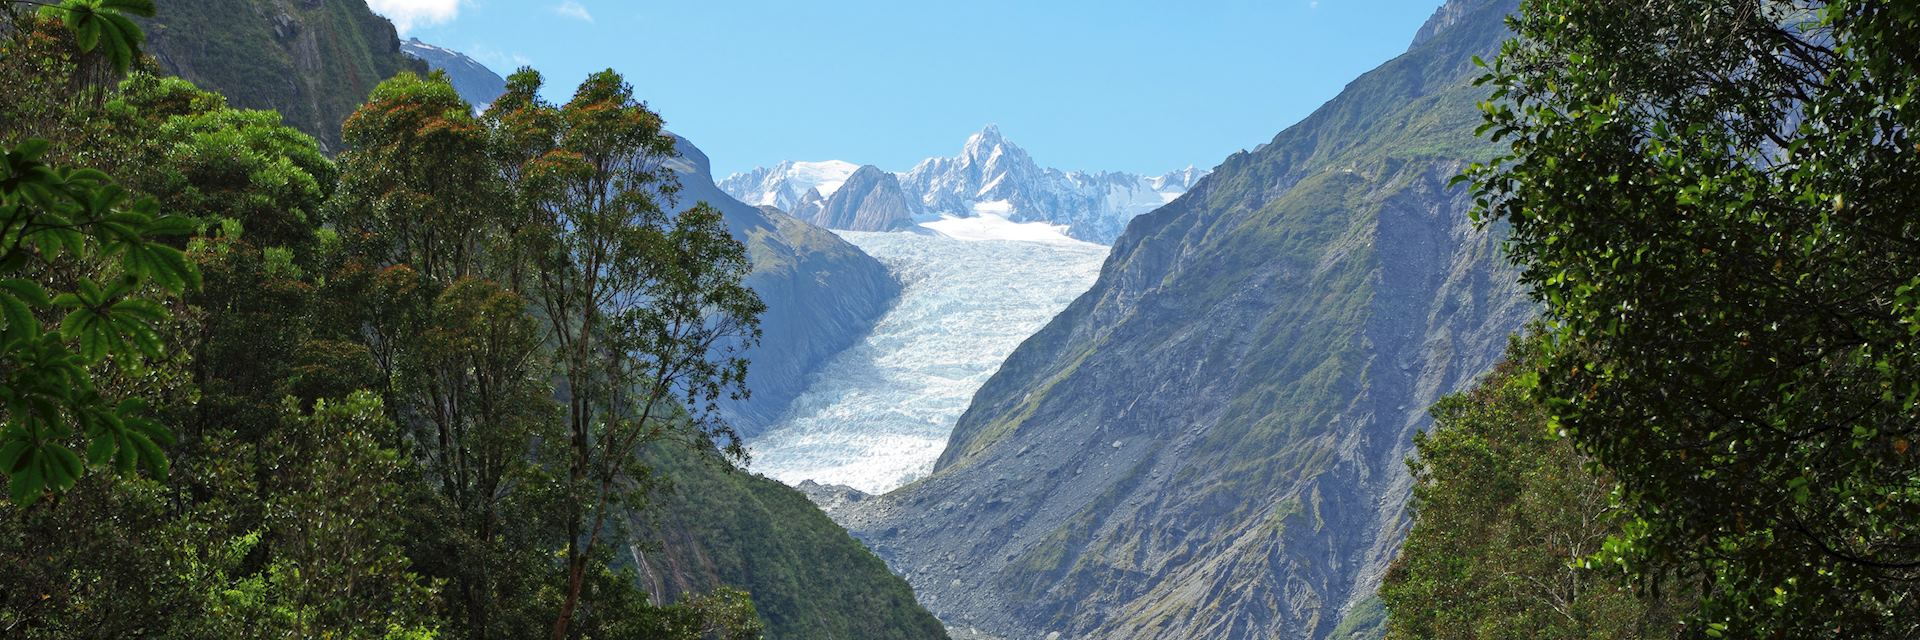 Franz Josef Glacier, South Island